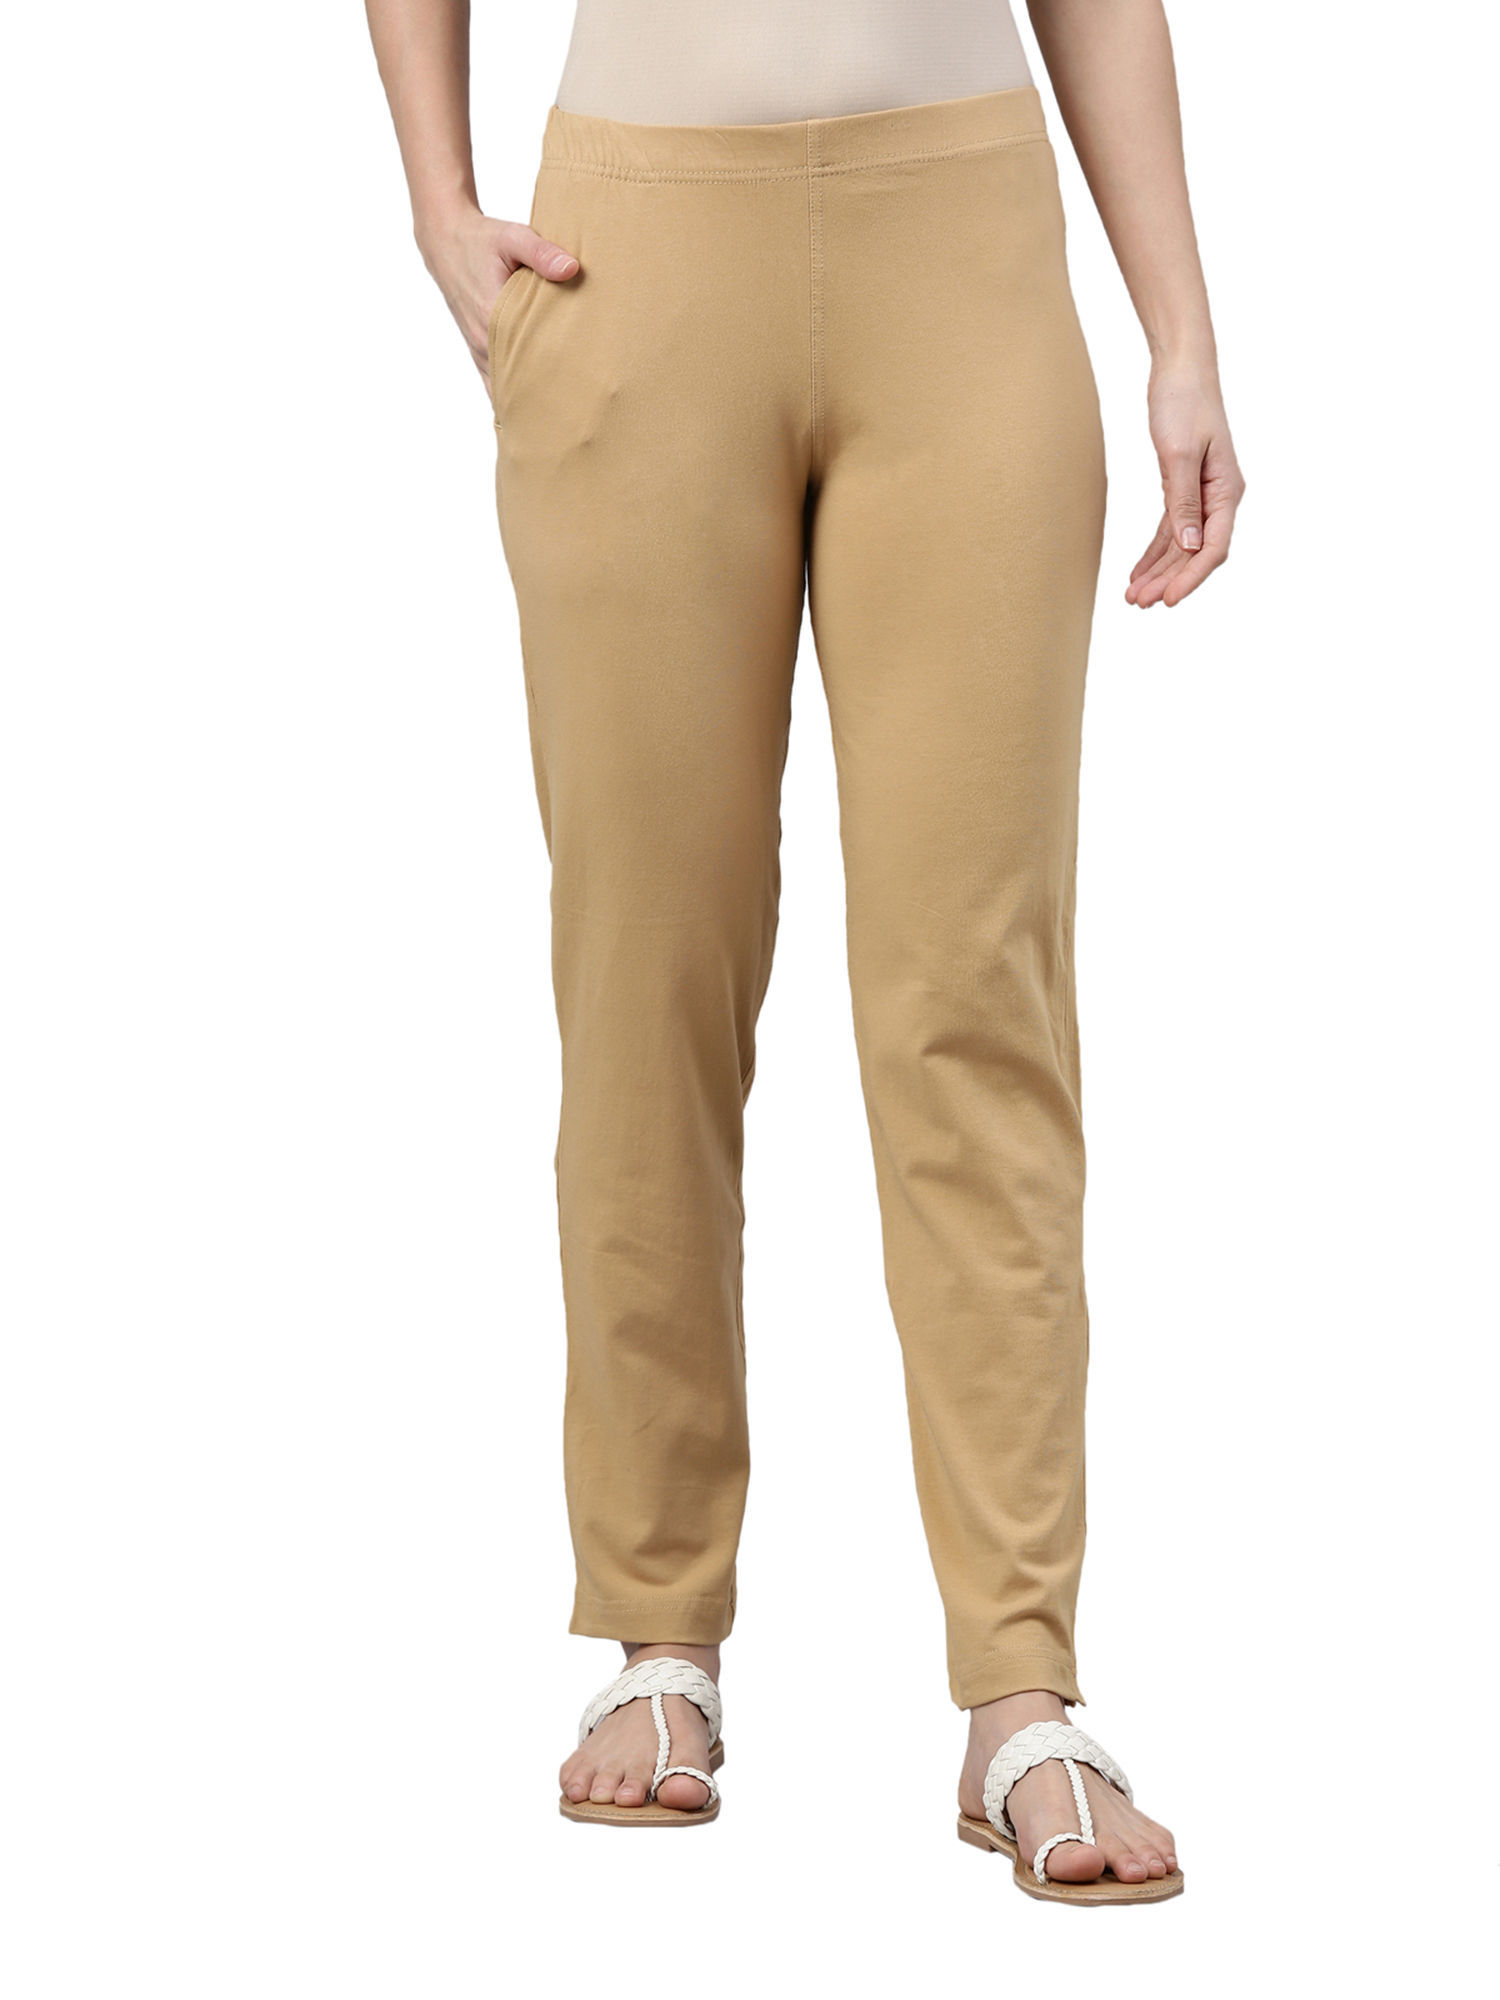 Mesmora Indian Women Fancy Casual Wear 100% Khadi Cotton Top And Pant Set  at Rs 1399/piece | Salwar Suit in Surat | ID: 25748189455